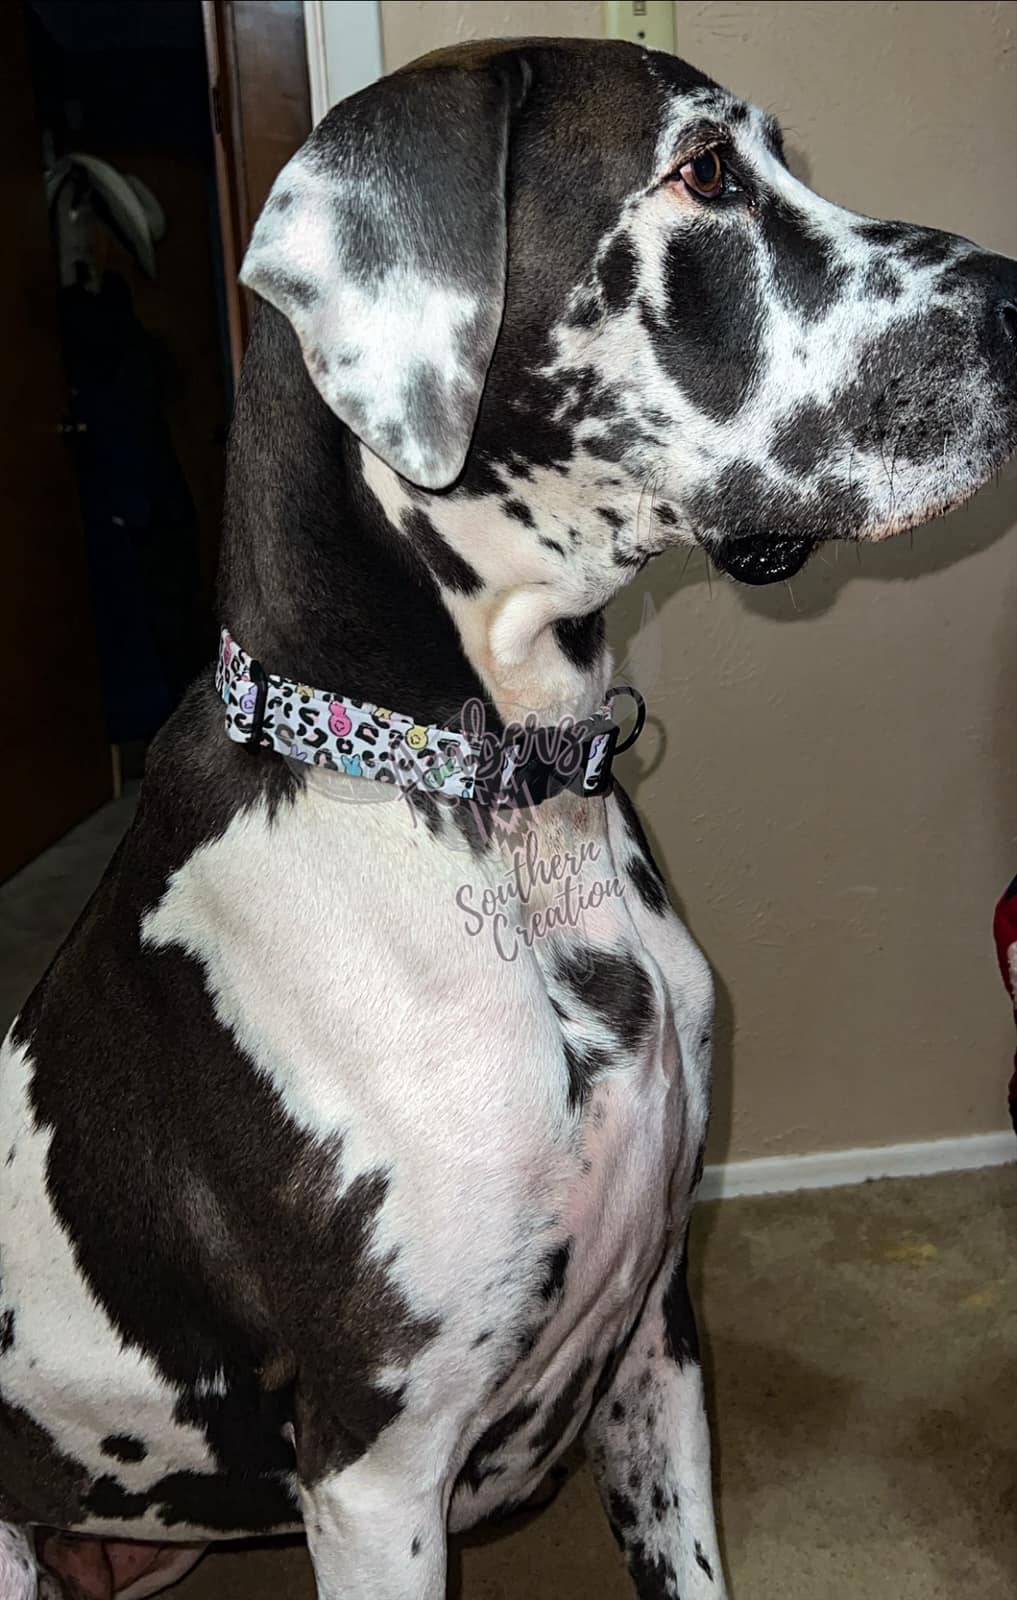 Custom Dog Collar - Listing